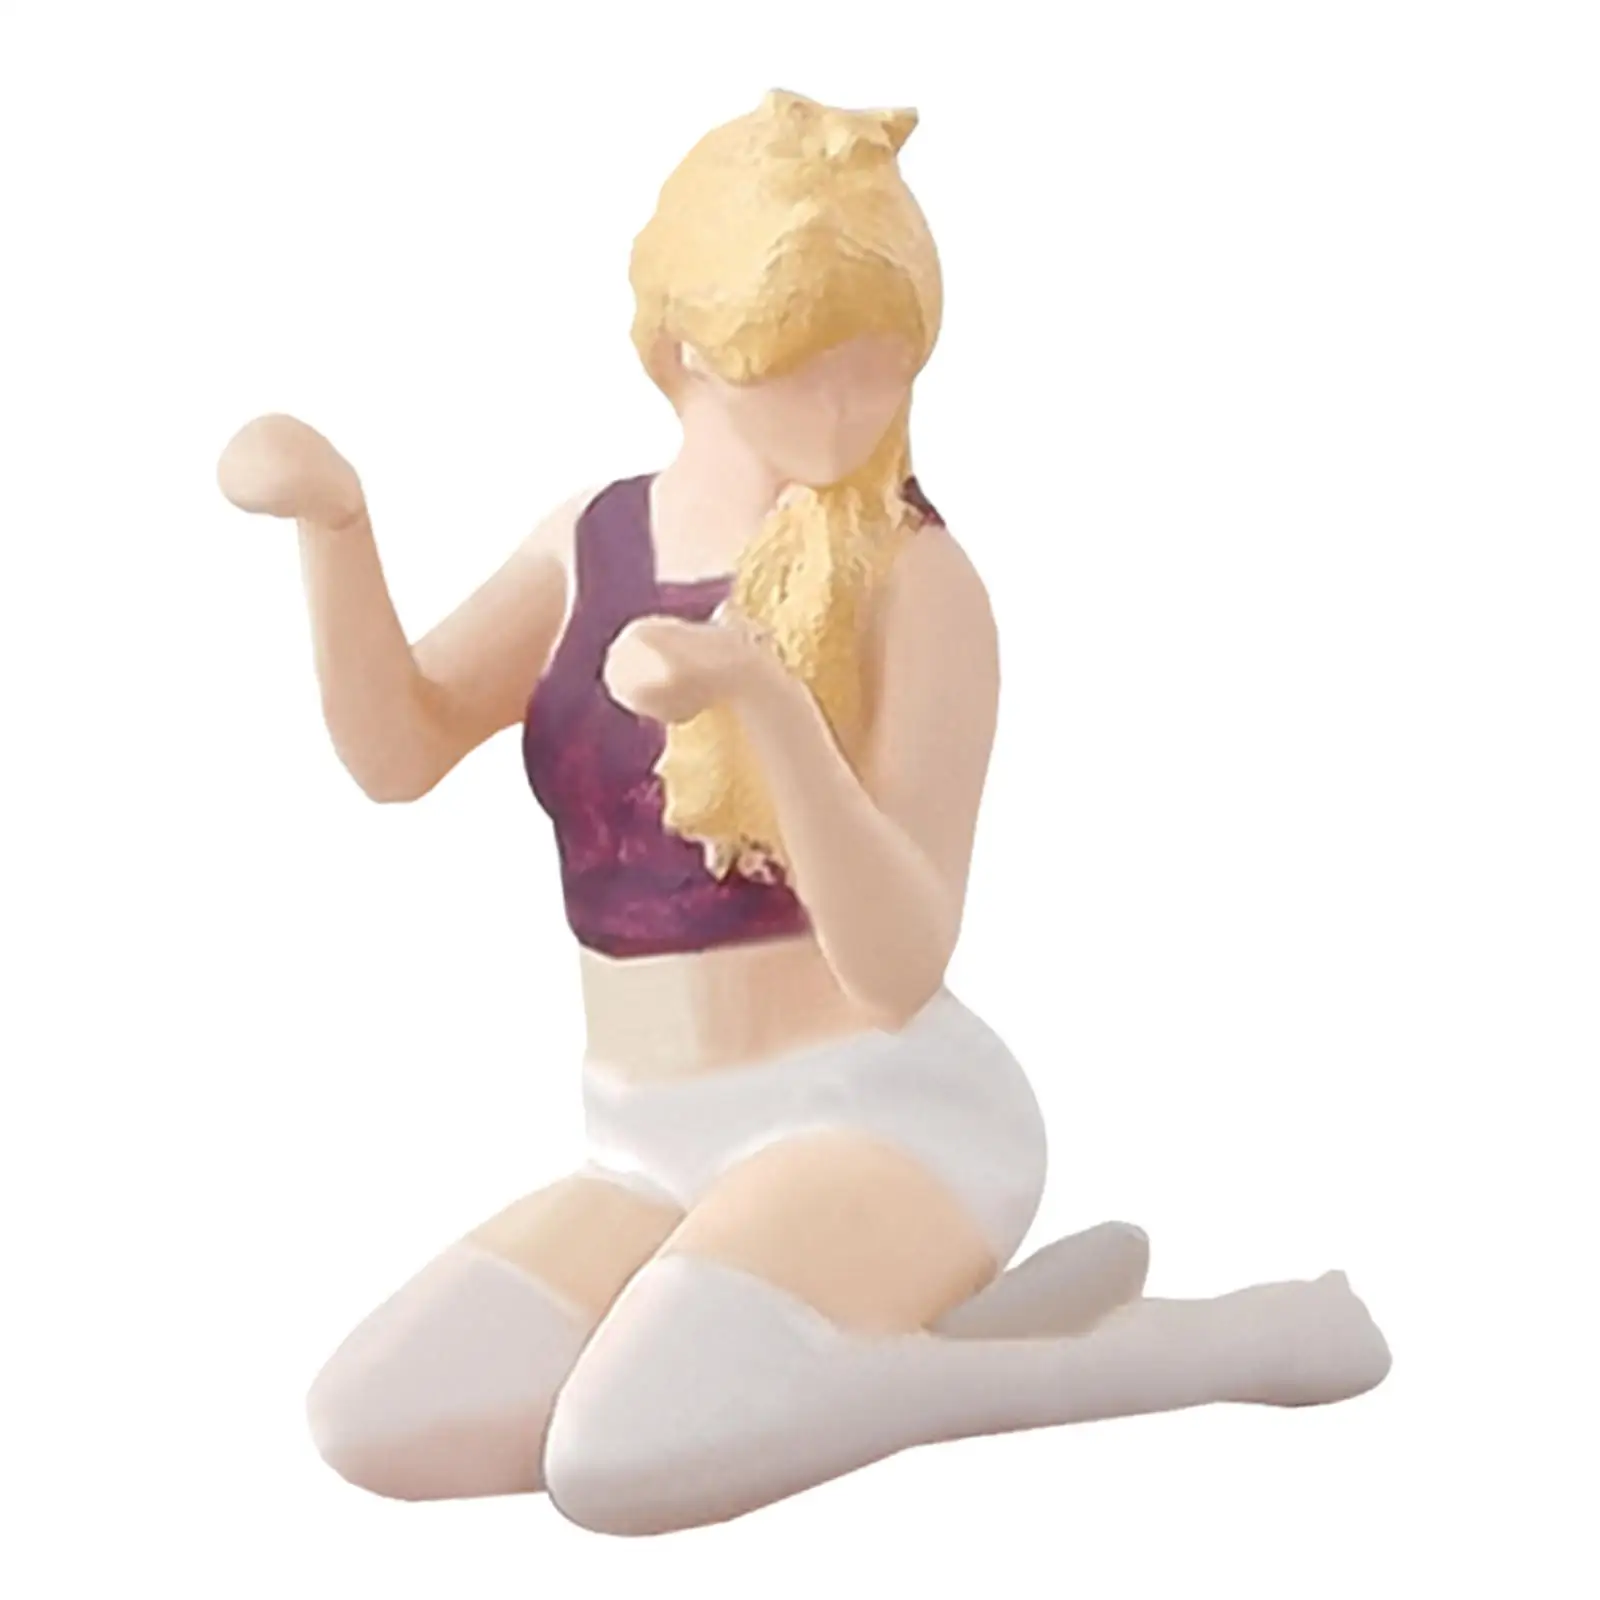 1:64 Scale Servant Girl Figure Housemaid Character for Desktop Ornament